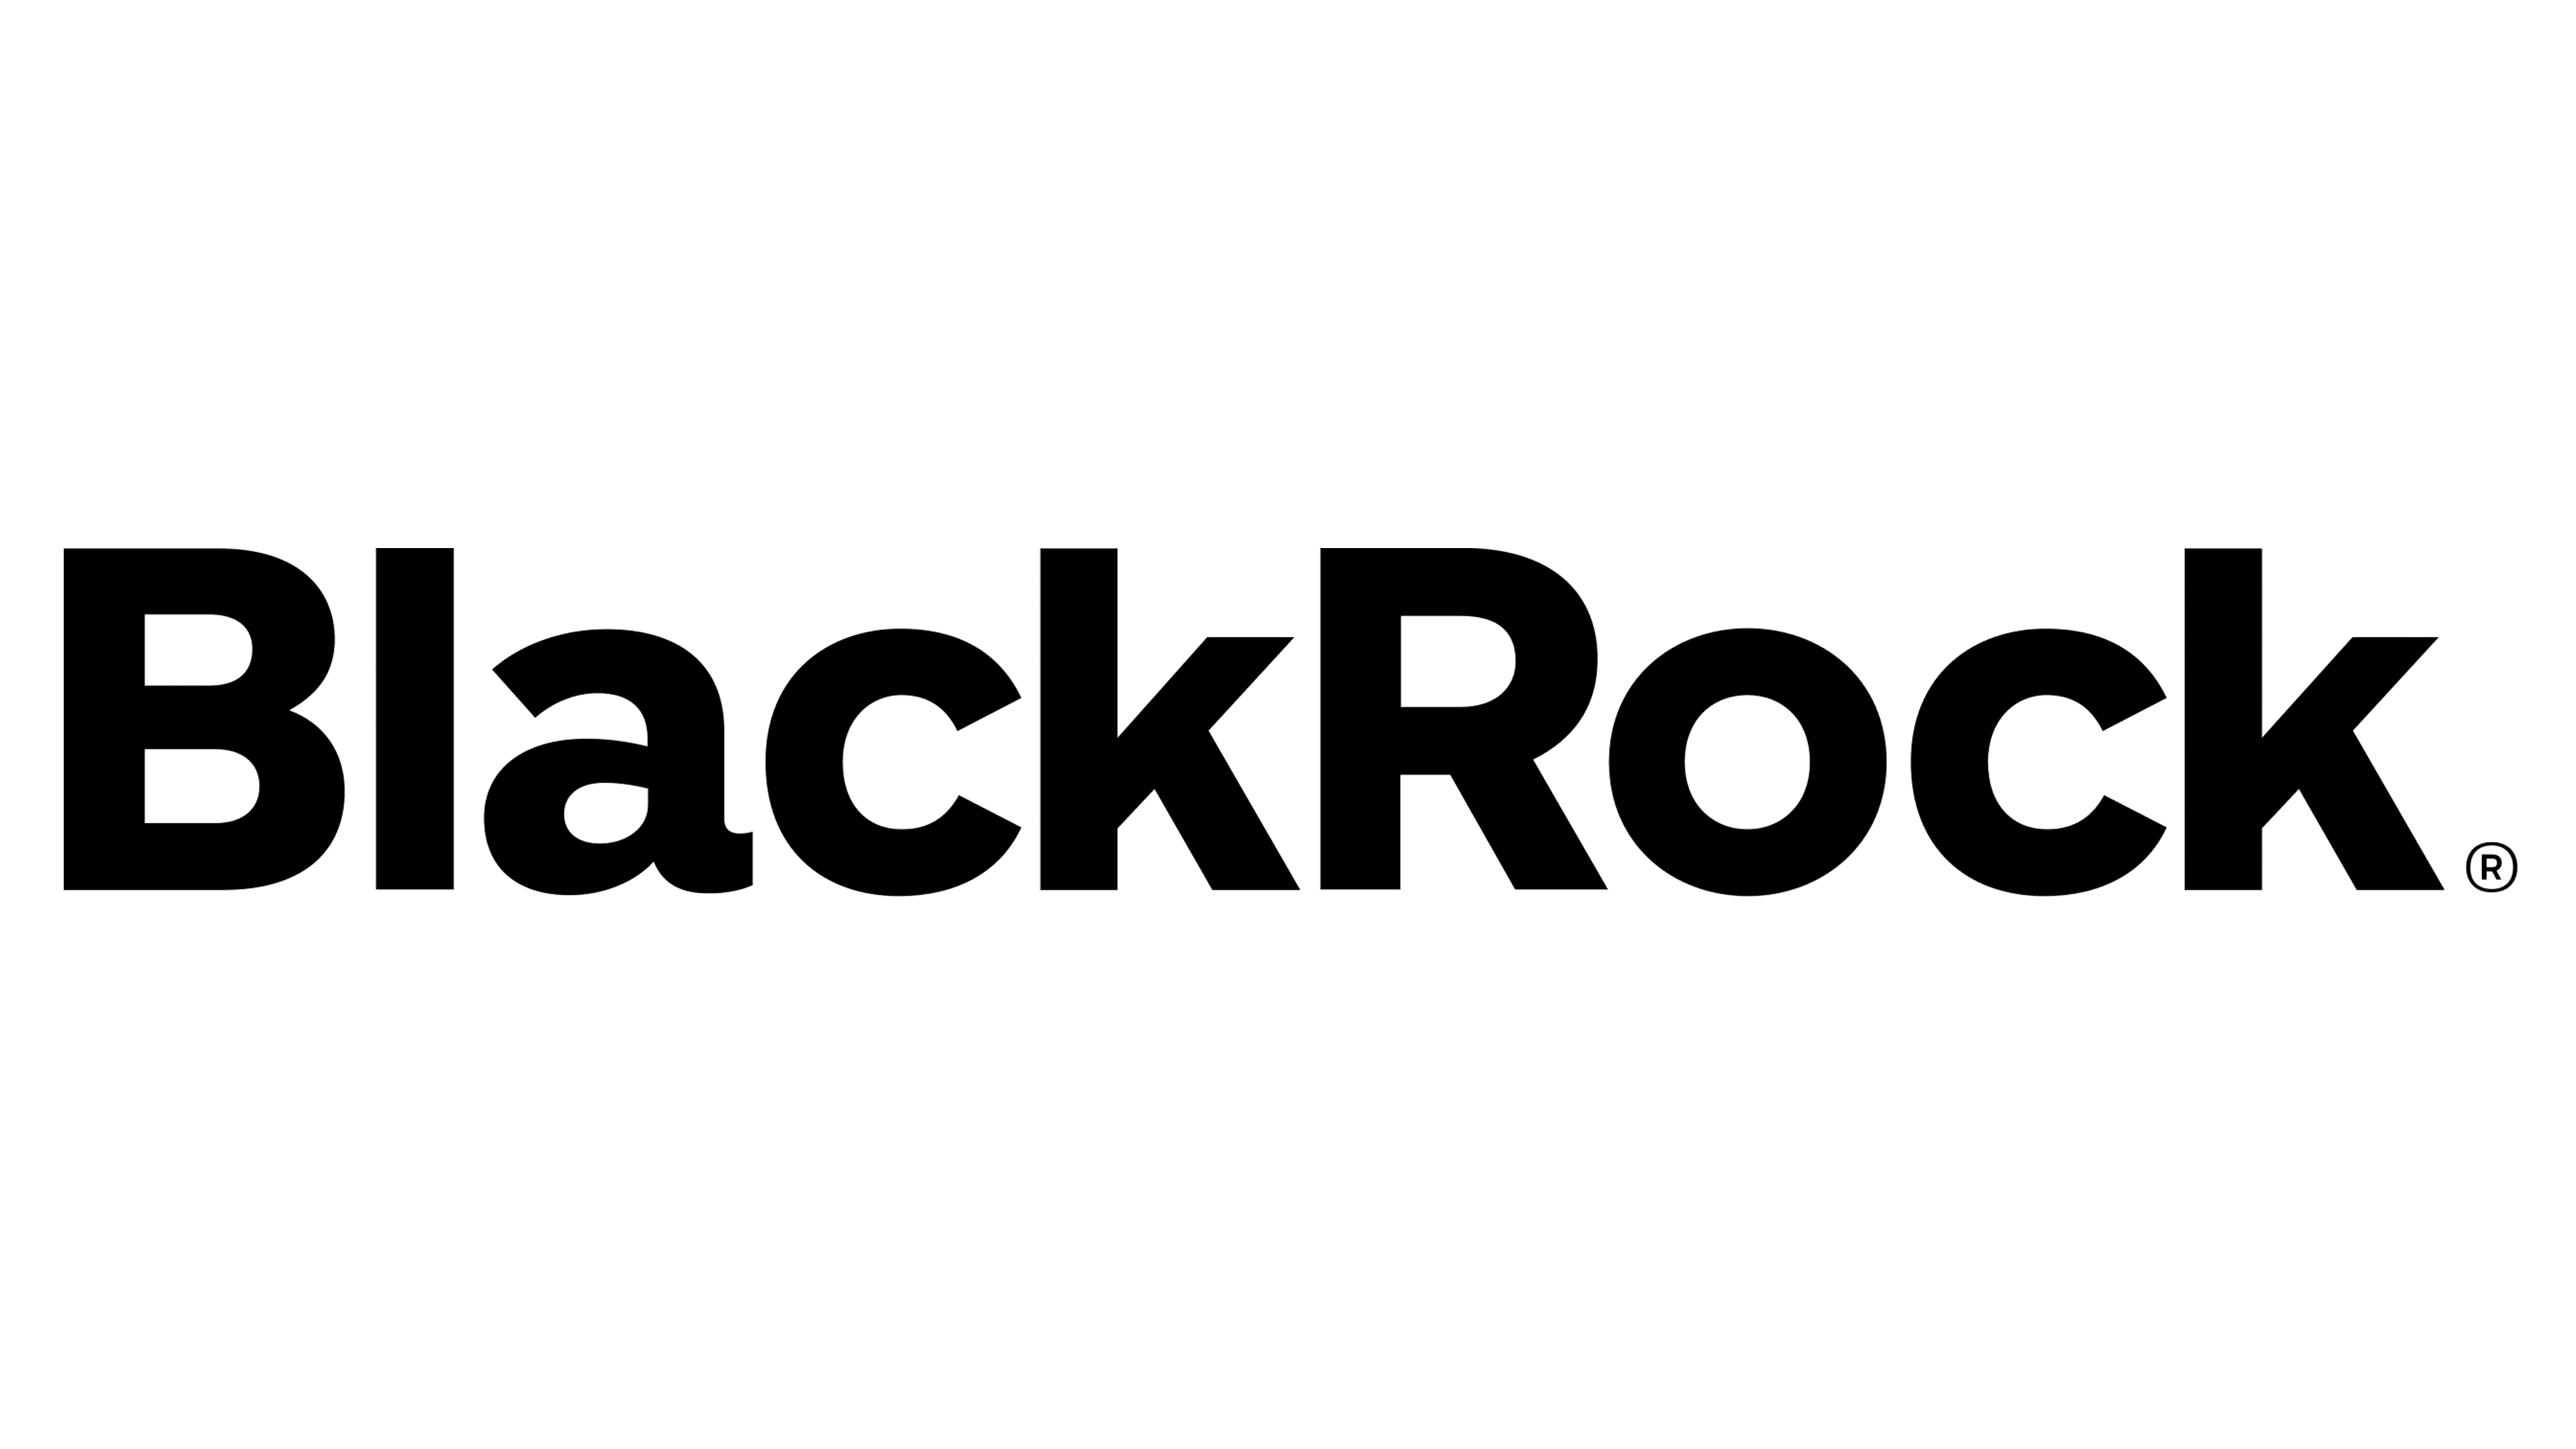 Blackrock logo best bees corporate beekeeping client